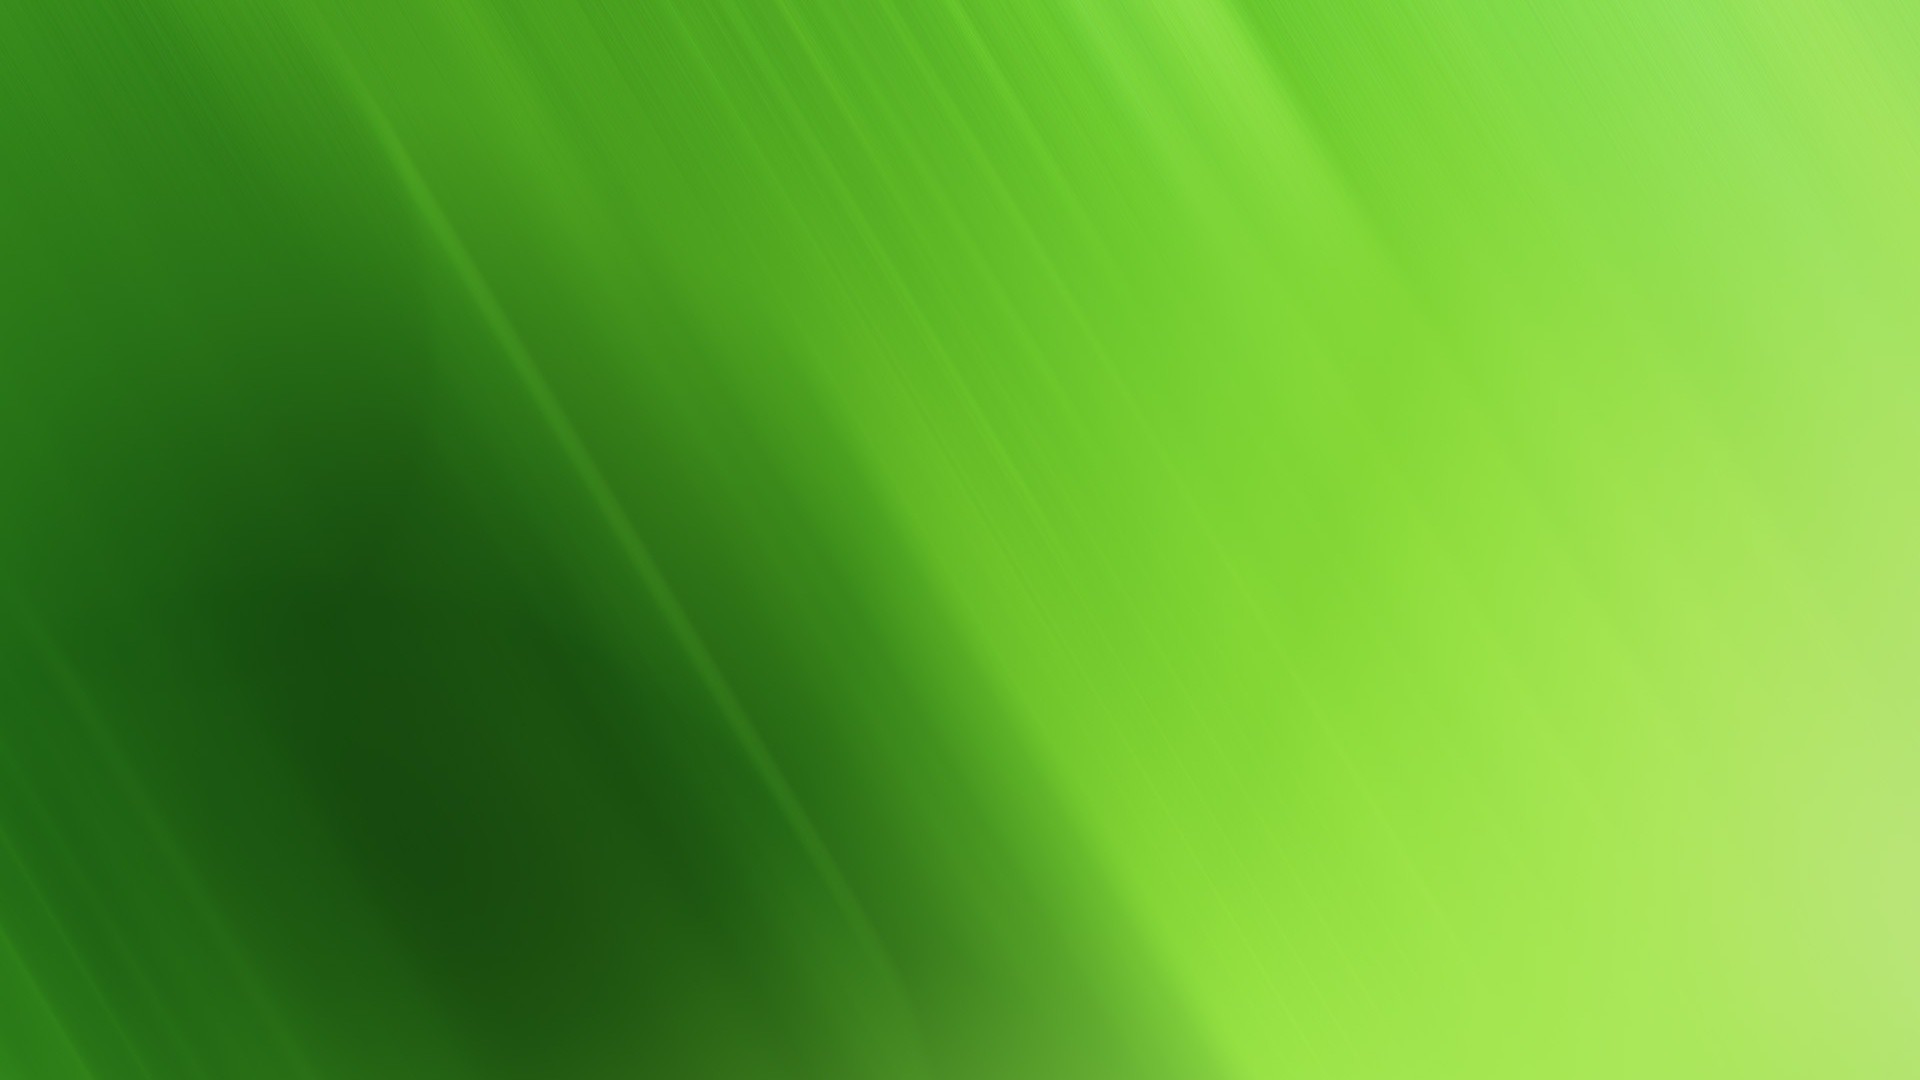 Green Hd Wallpapers 1080p - Clean Green - 1920x1080 Wallpaper 